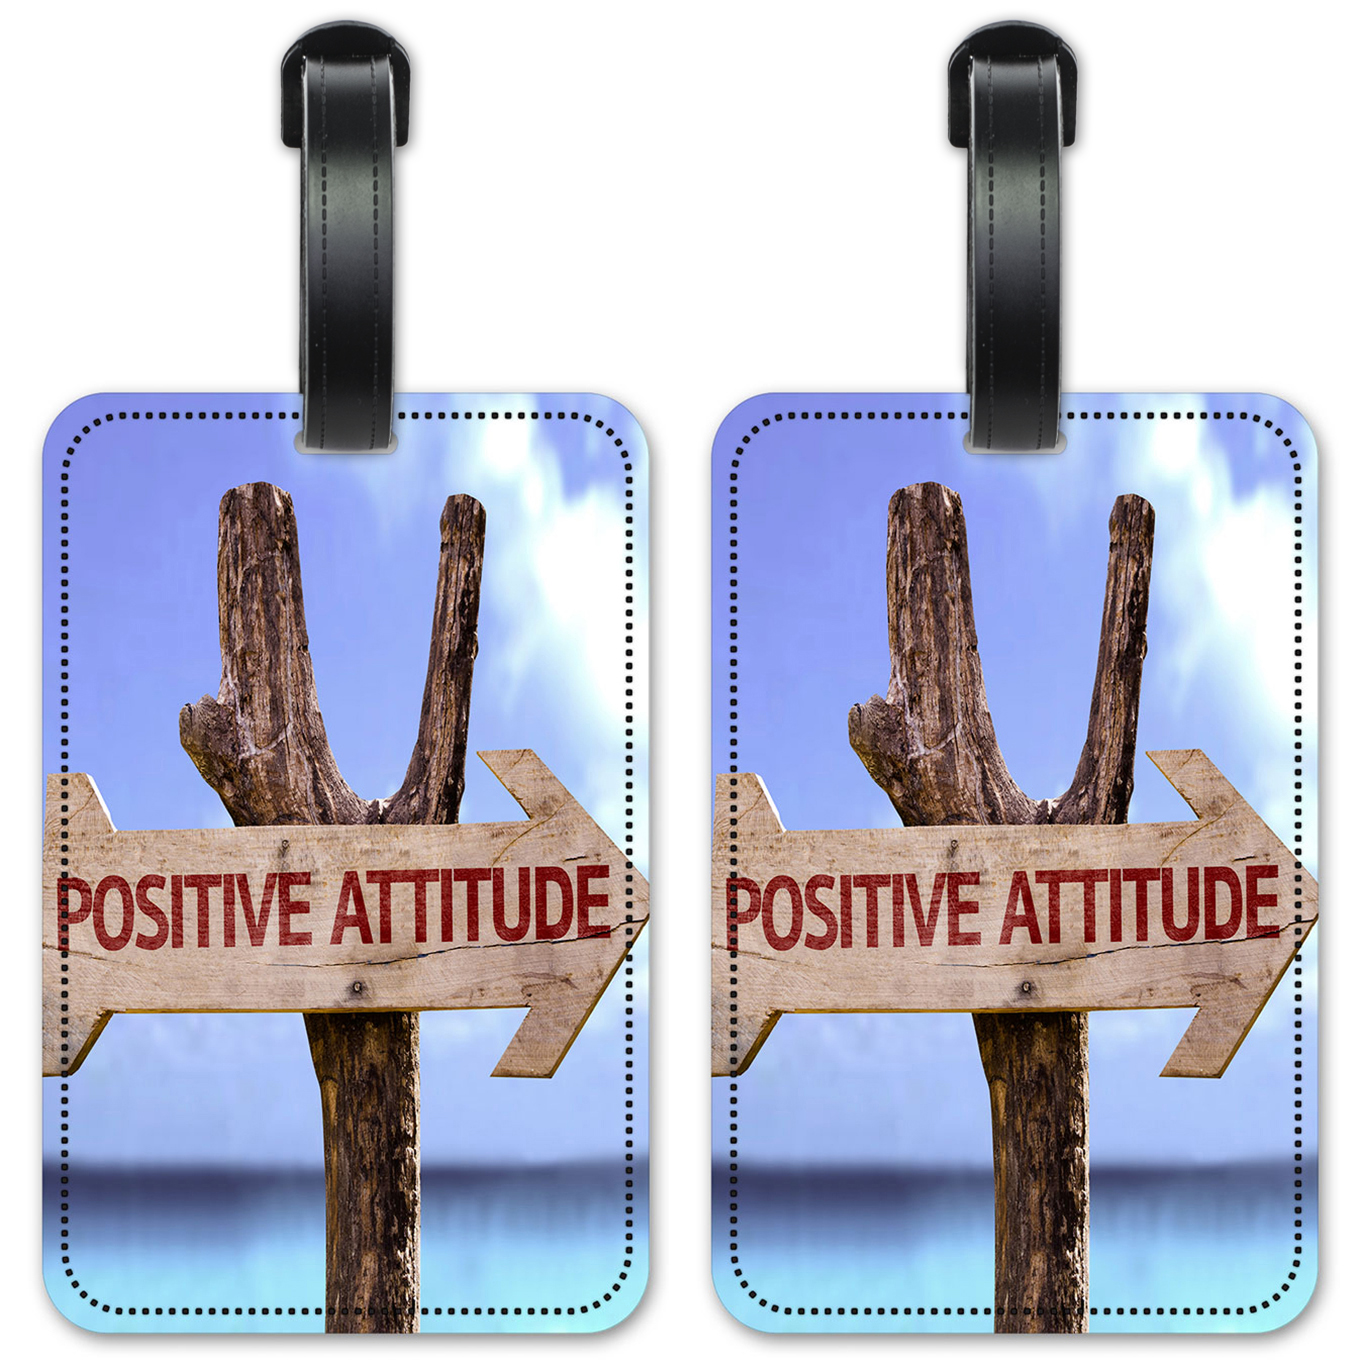 Positive Attitude - #3054